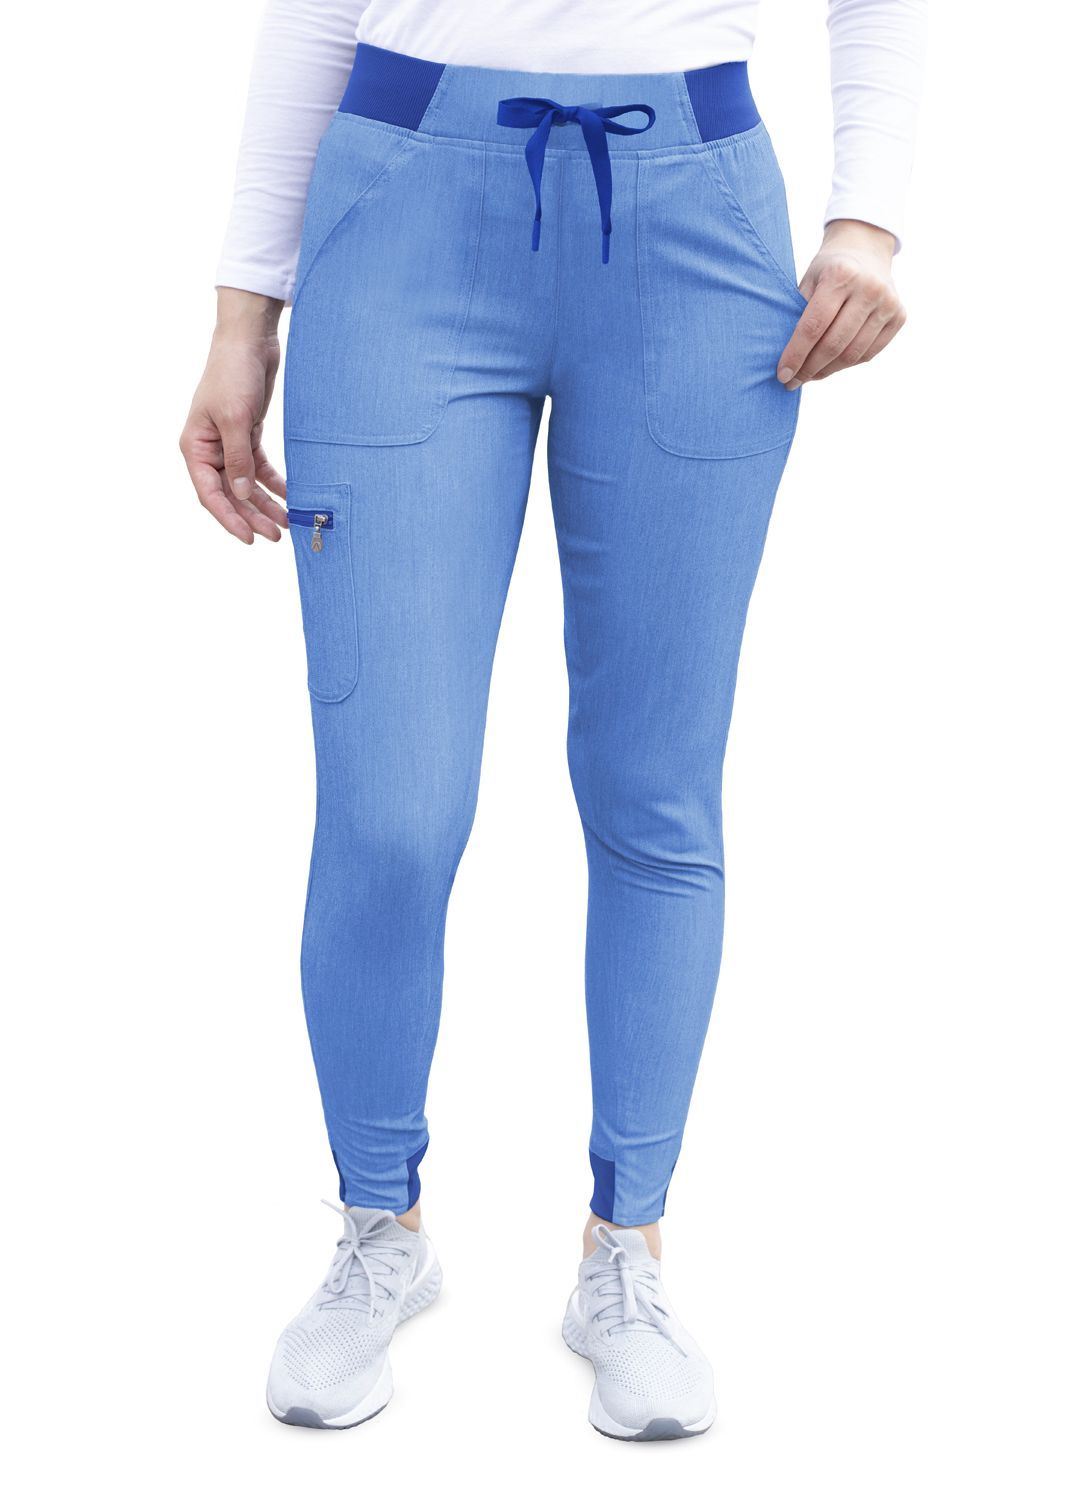 Adar Pro Scrubs For Women - Tailored Yoga Scrub Pants 